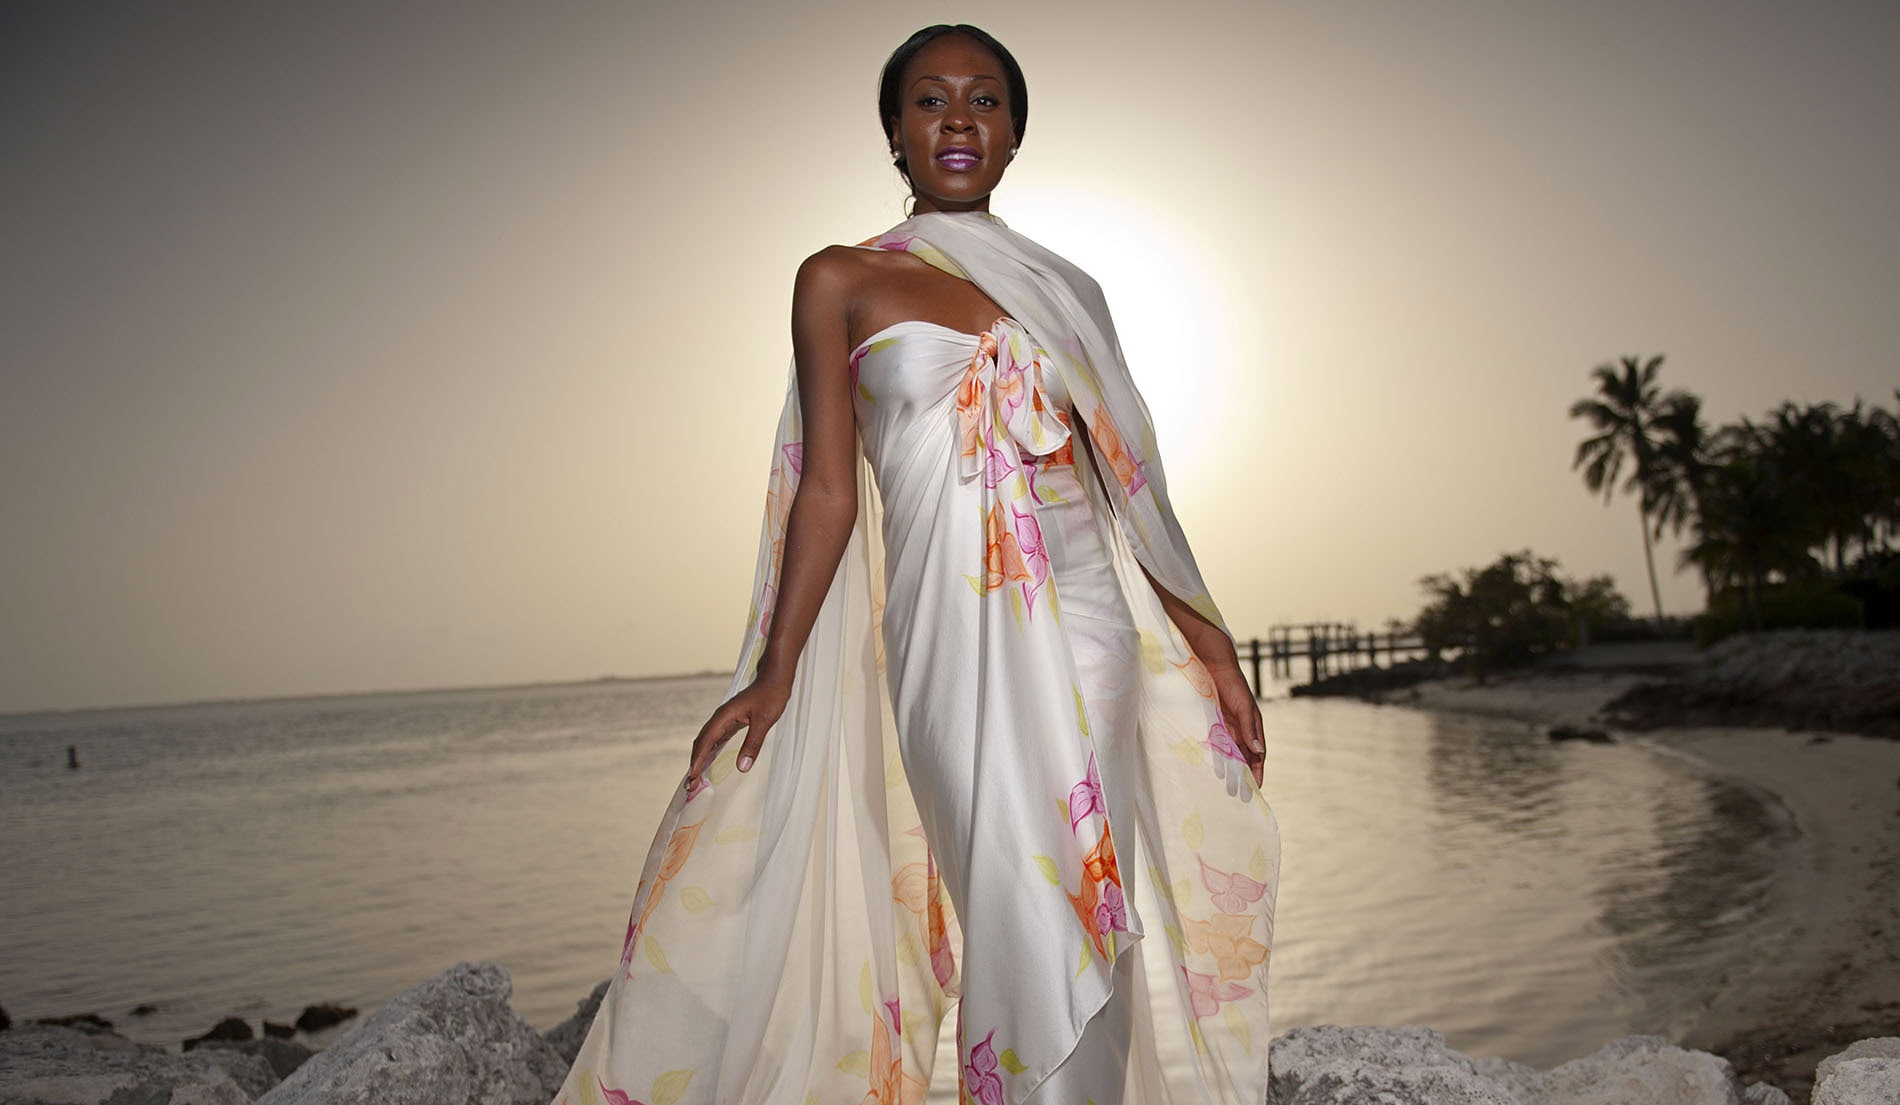 Glamour Tropical Destination Wedding Veil - Look 1 front